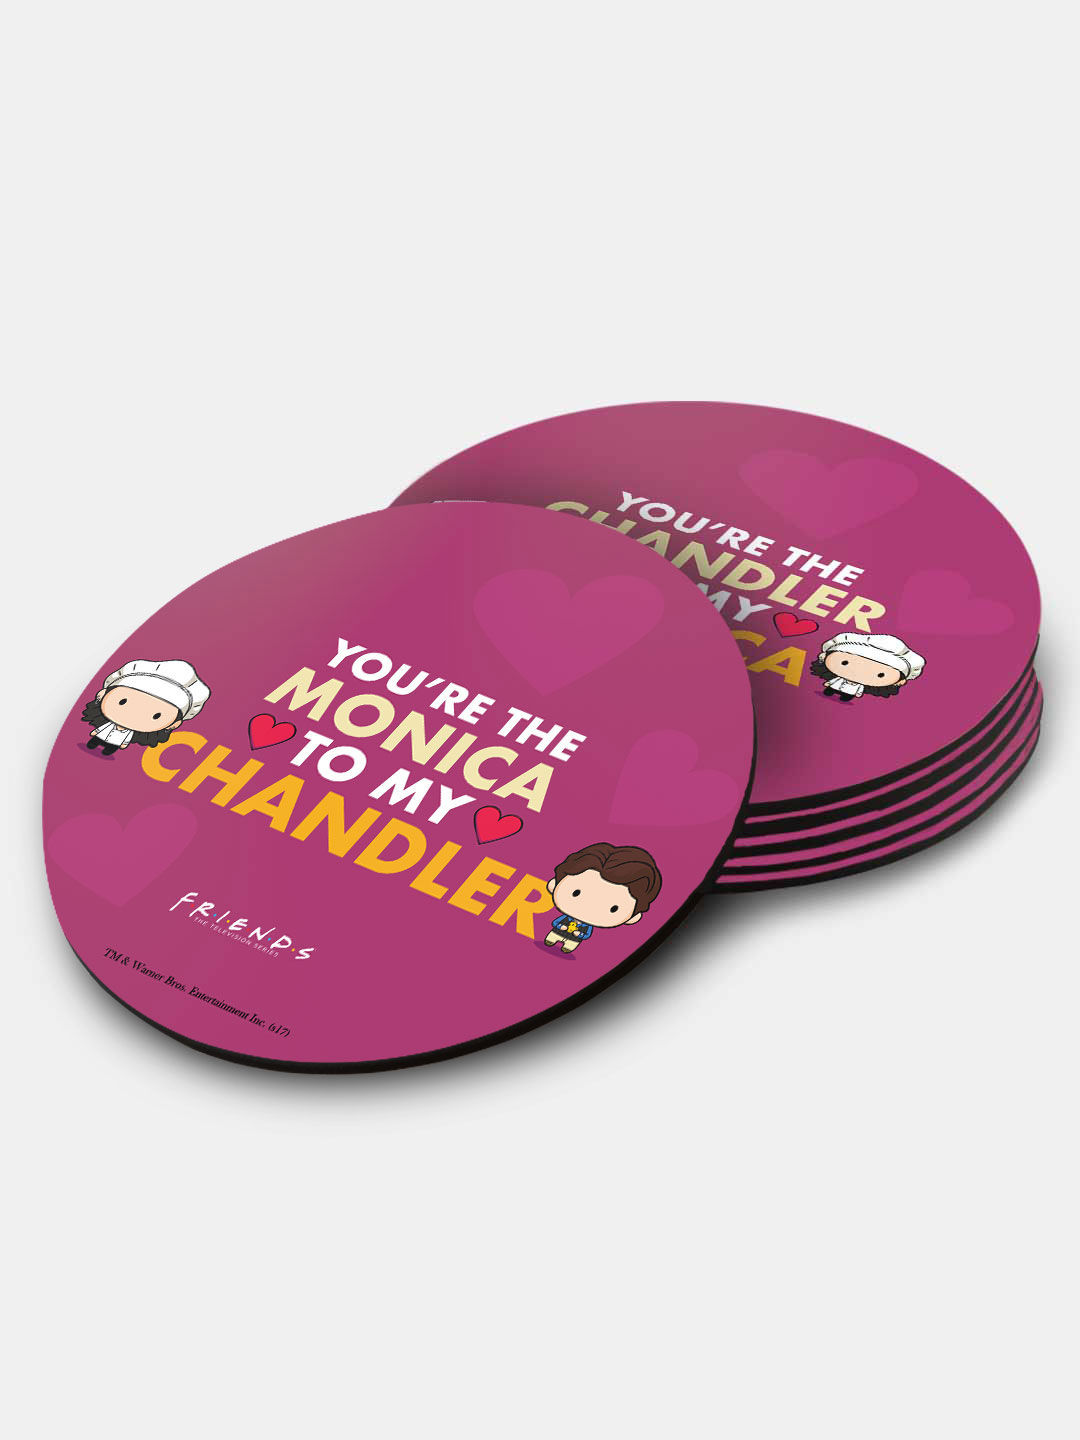 Valentine Chandler Monica - Circular Set of 2 Coaster